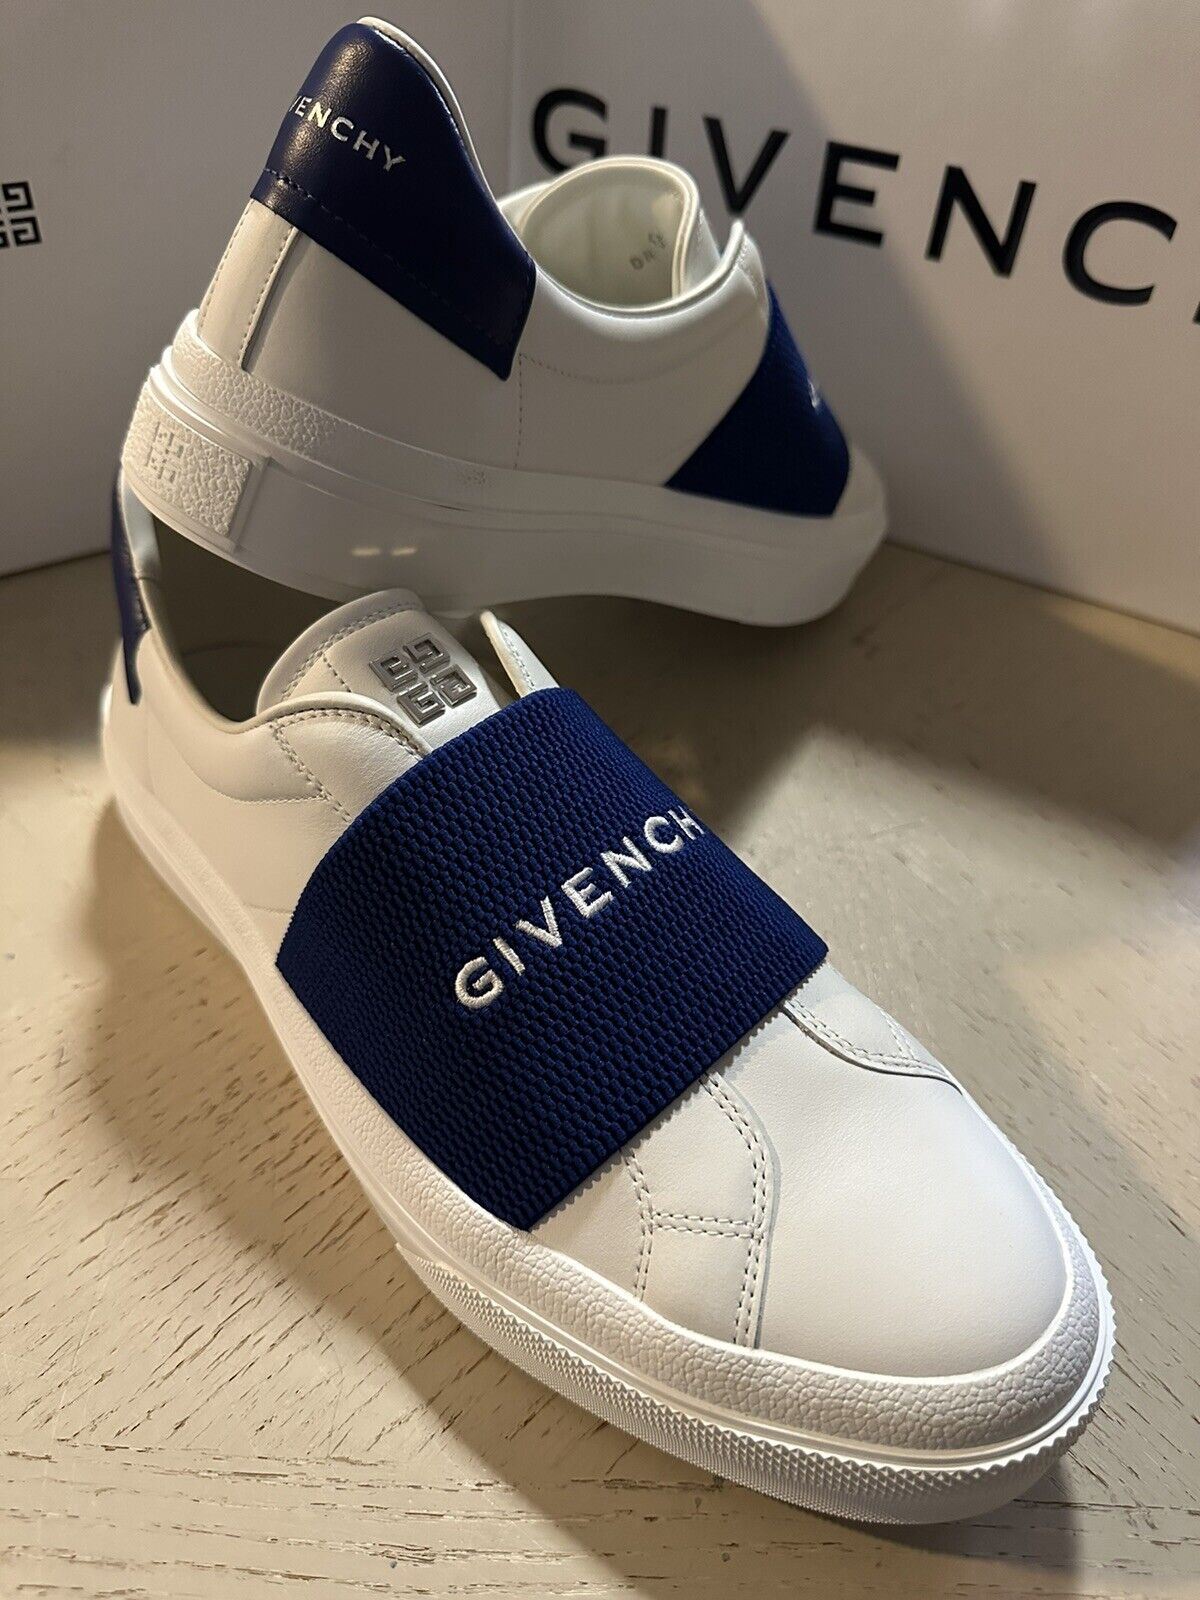 NIB Givenchy Herren City Sport Elastic Vamp Ledersneaker Weiß/Blau 10 US/43 Eu